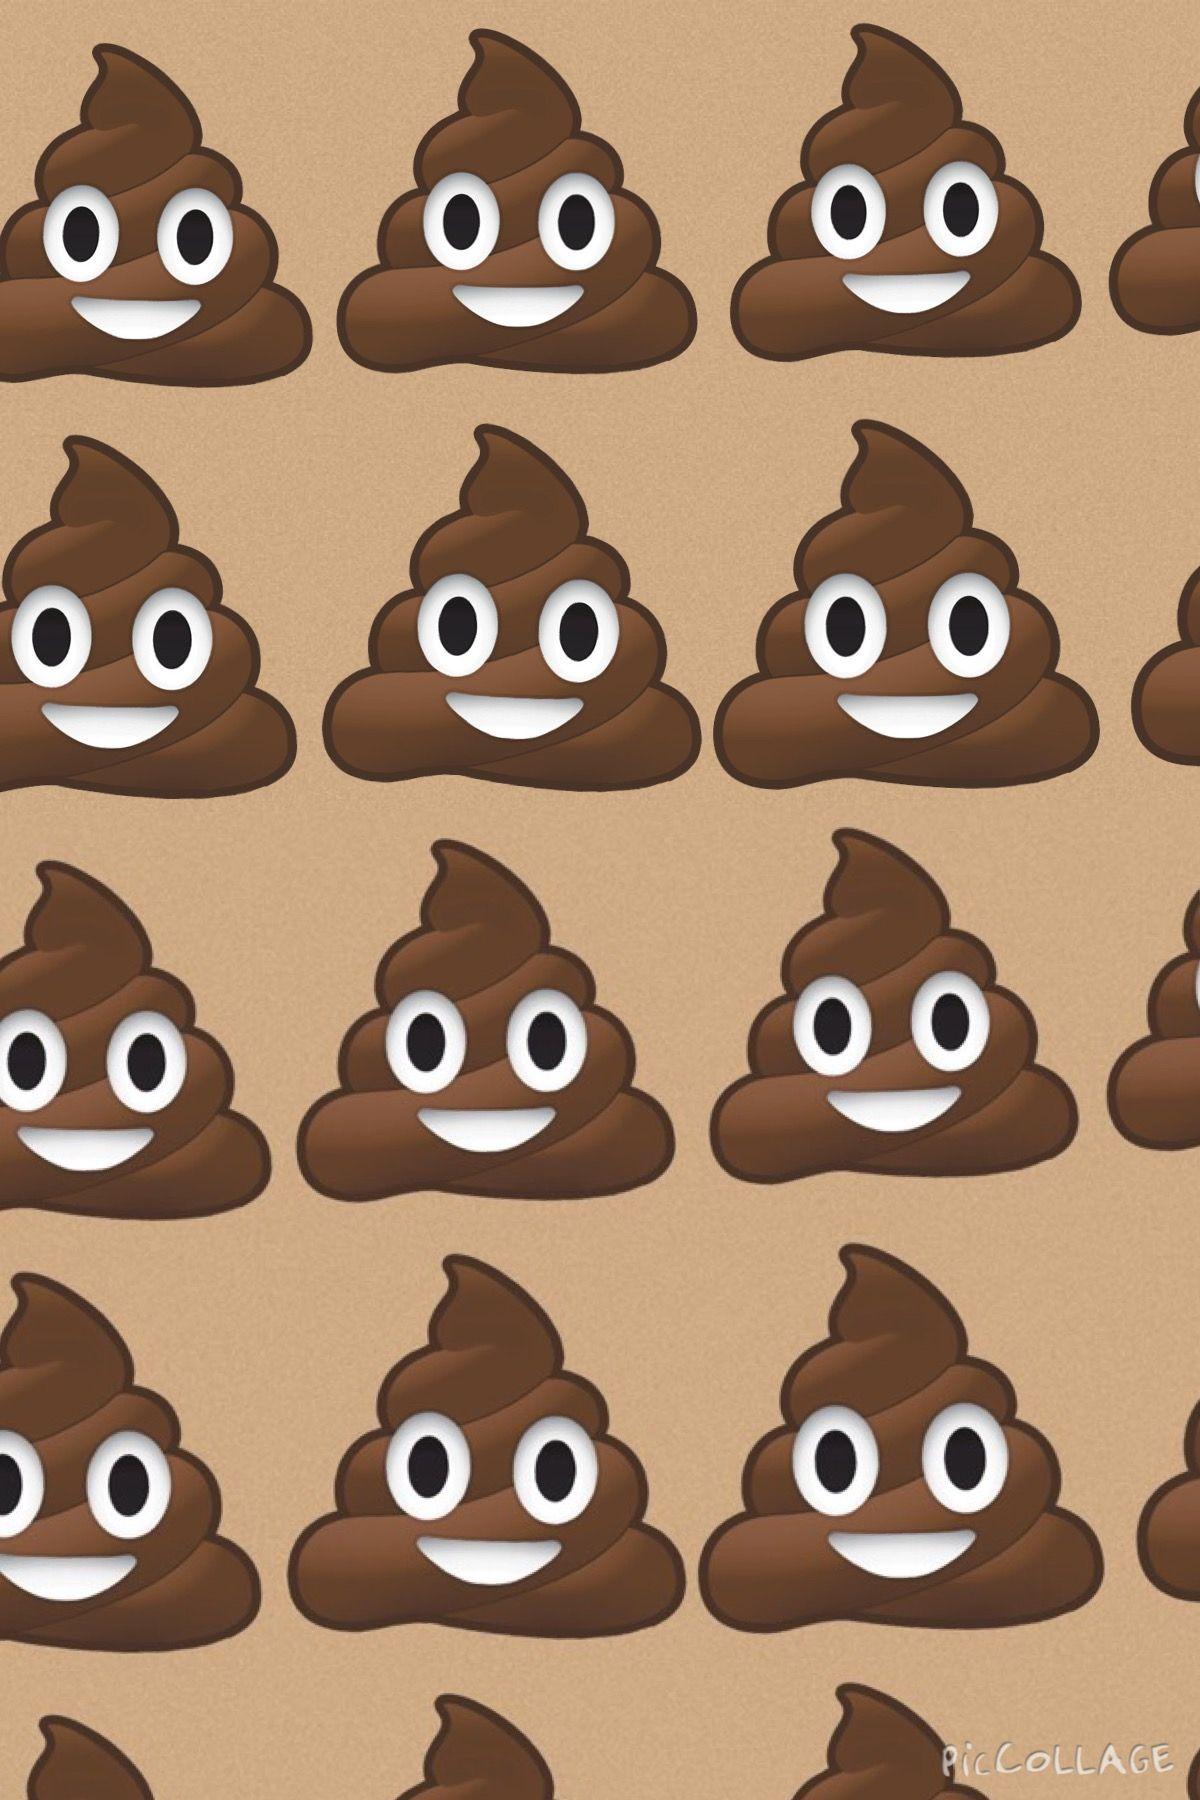 Poop emoji background. Background. Emoji wallpaper